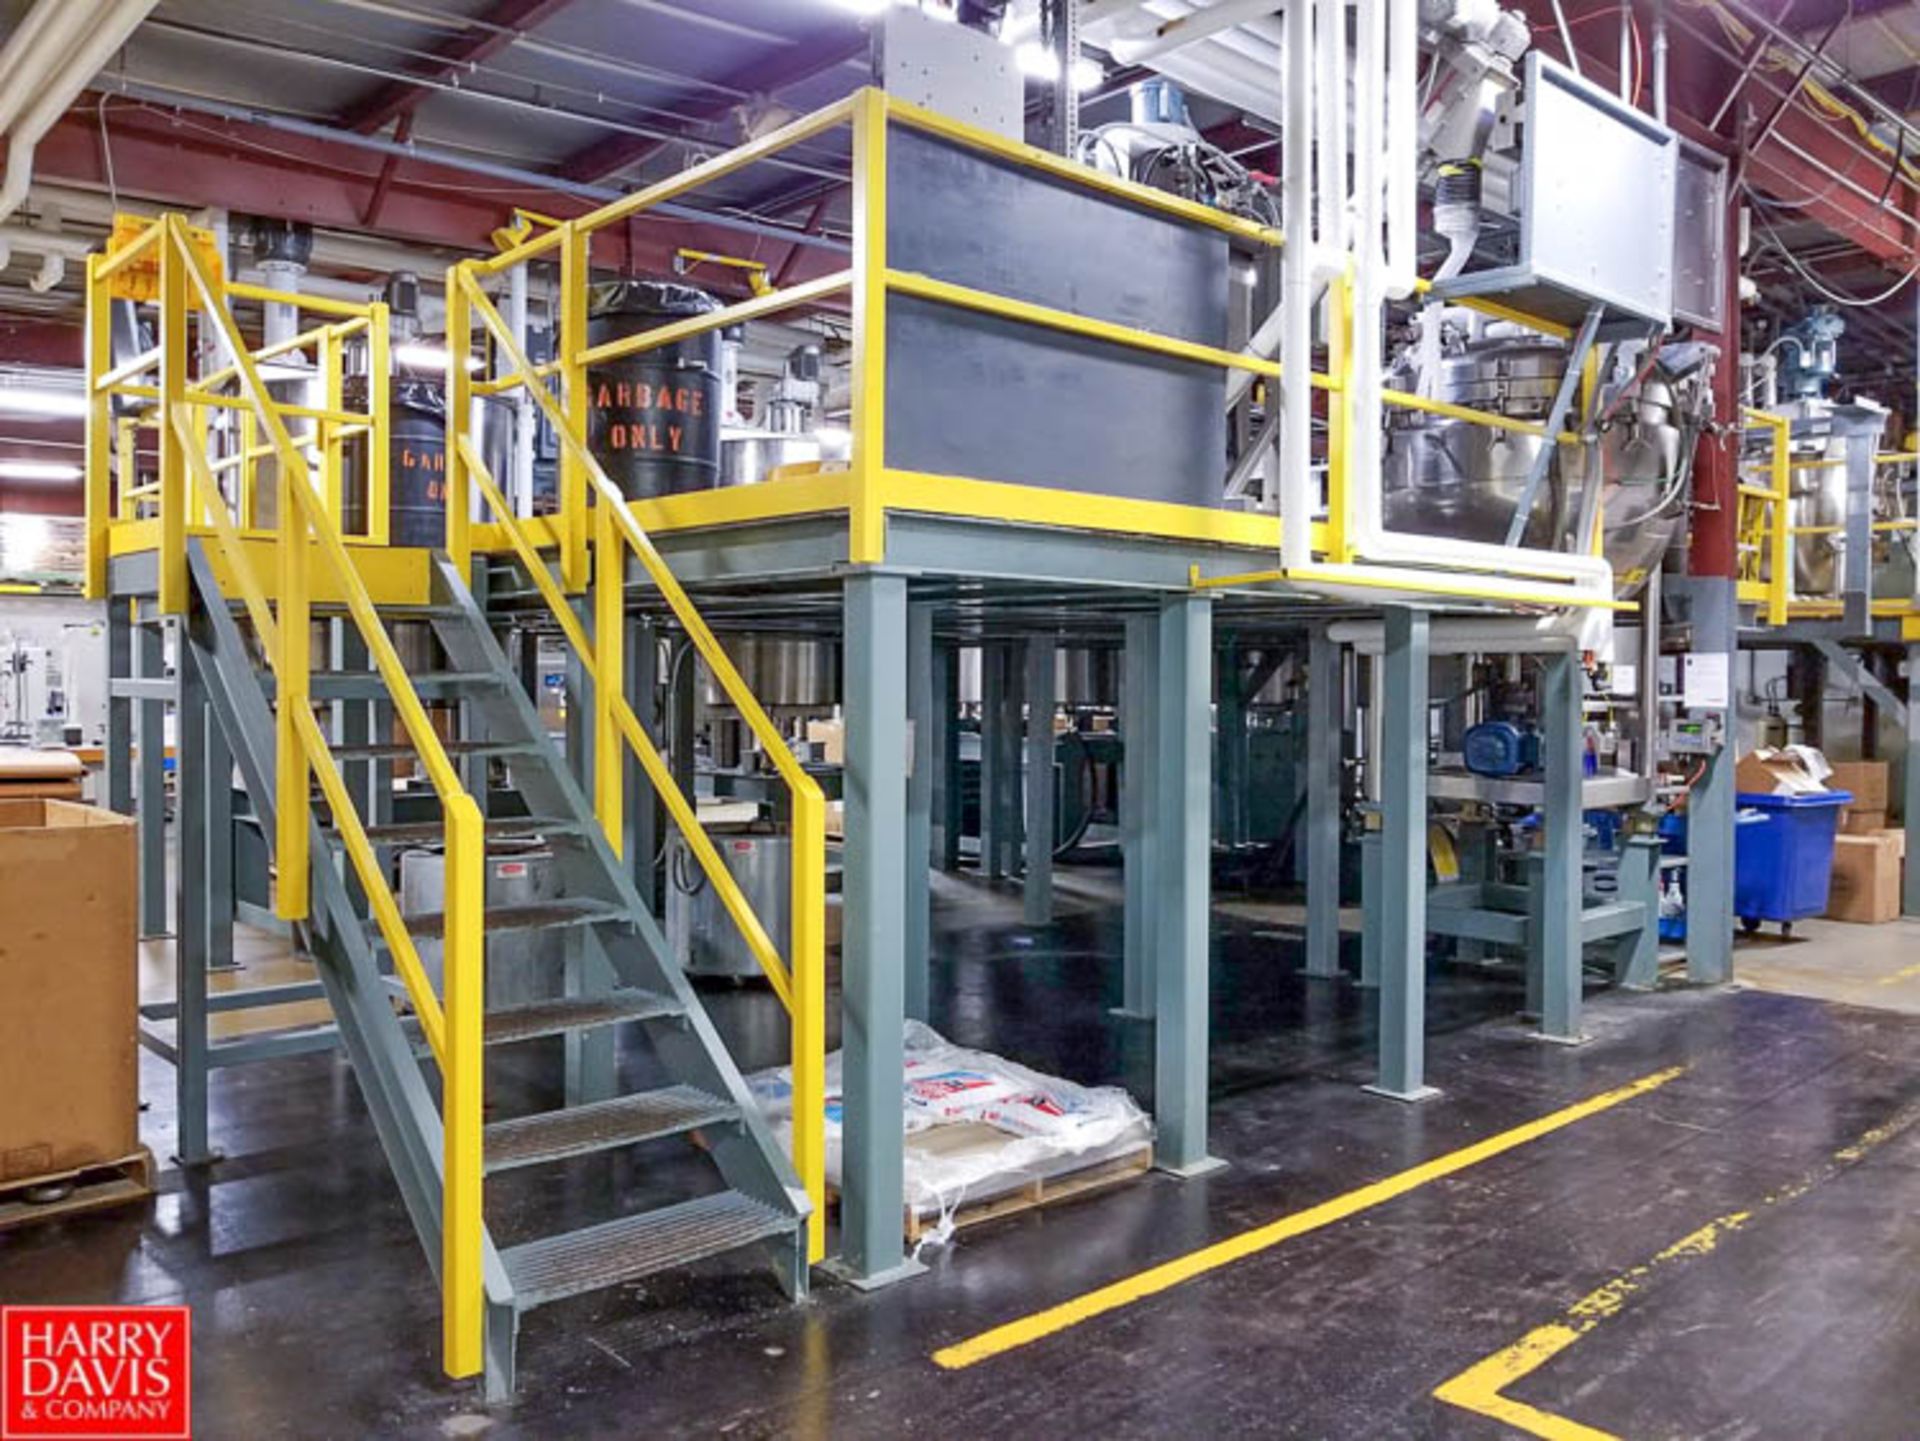 Carbon Steel Mezzanine L-Shaped, 39' x 21' x 10', Plate Steel Platform Rigging Fee: $7500 - Image 3 of 4